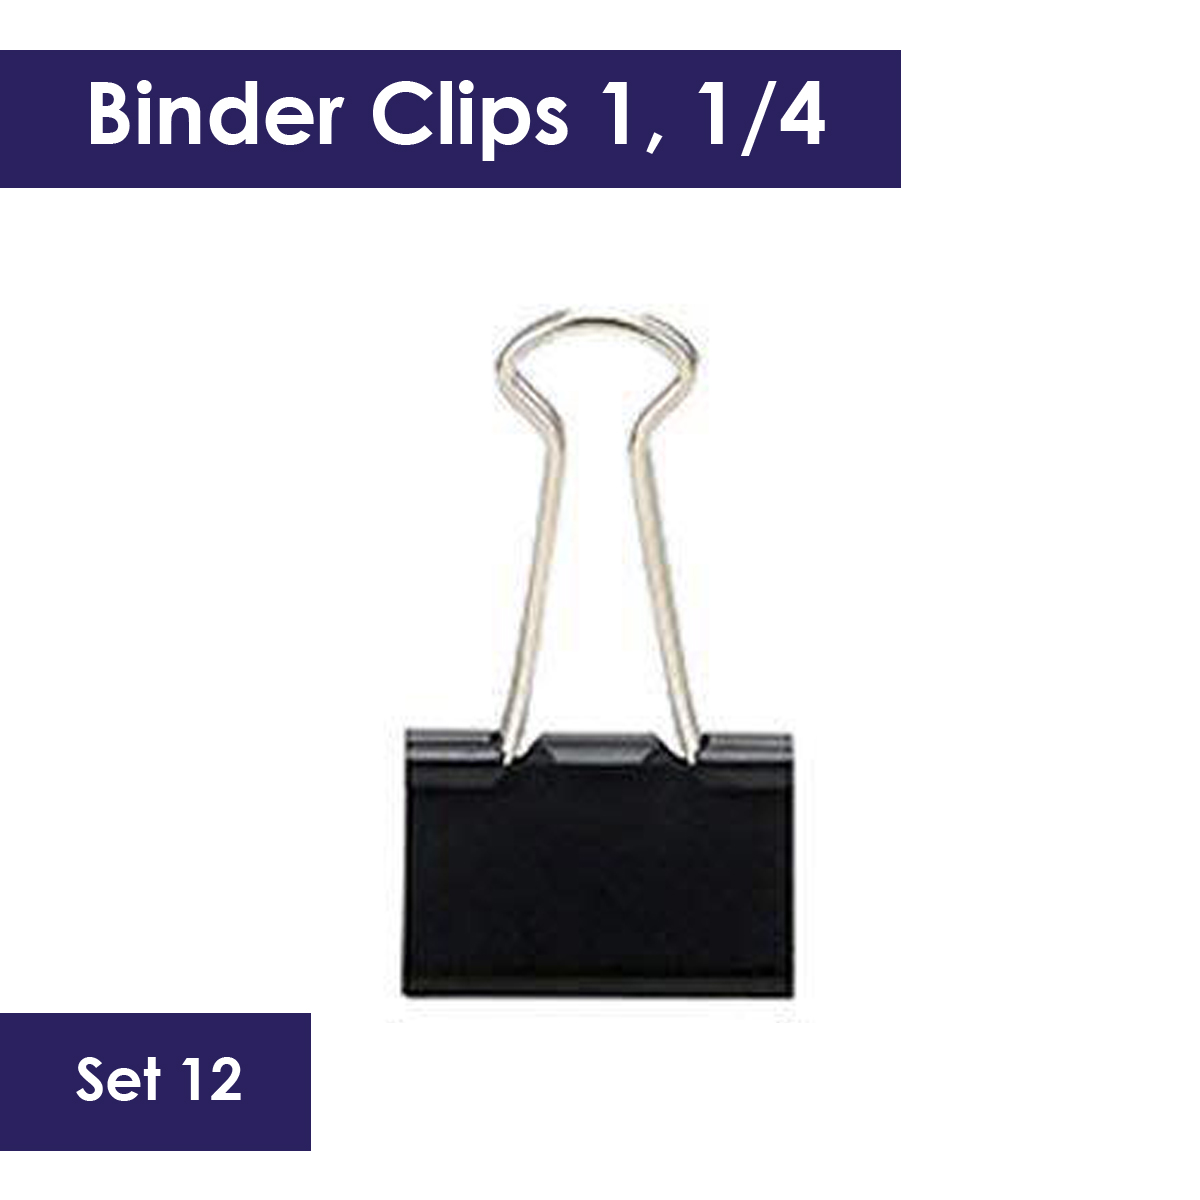 Binder Clips 1-1/4